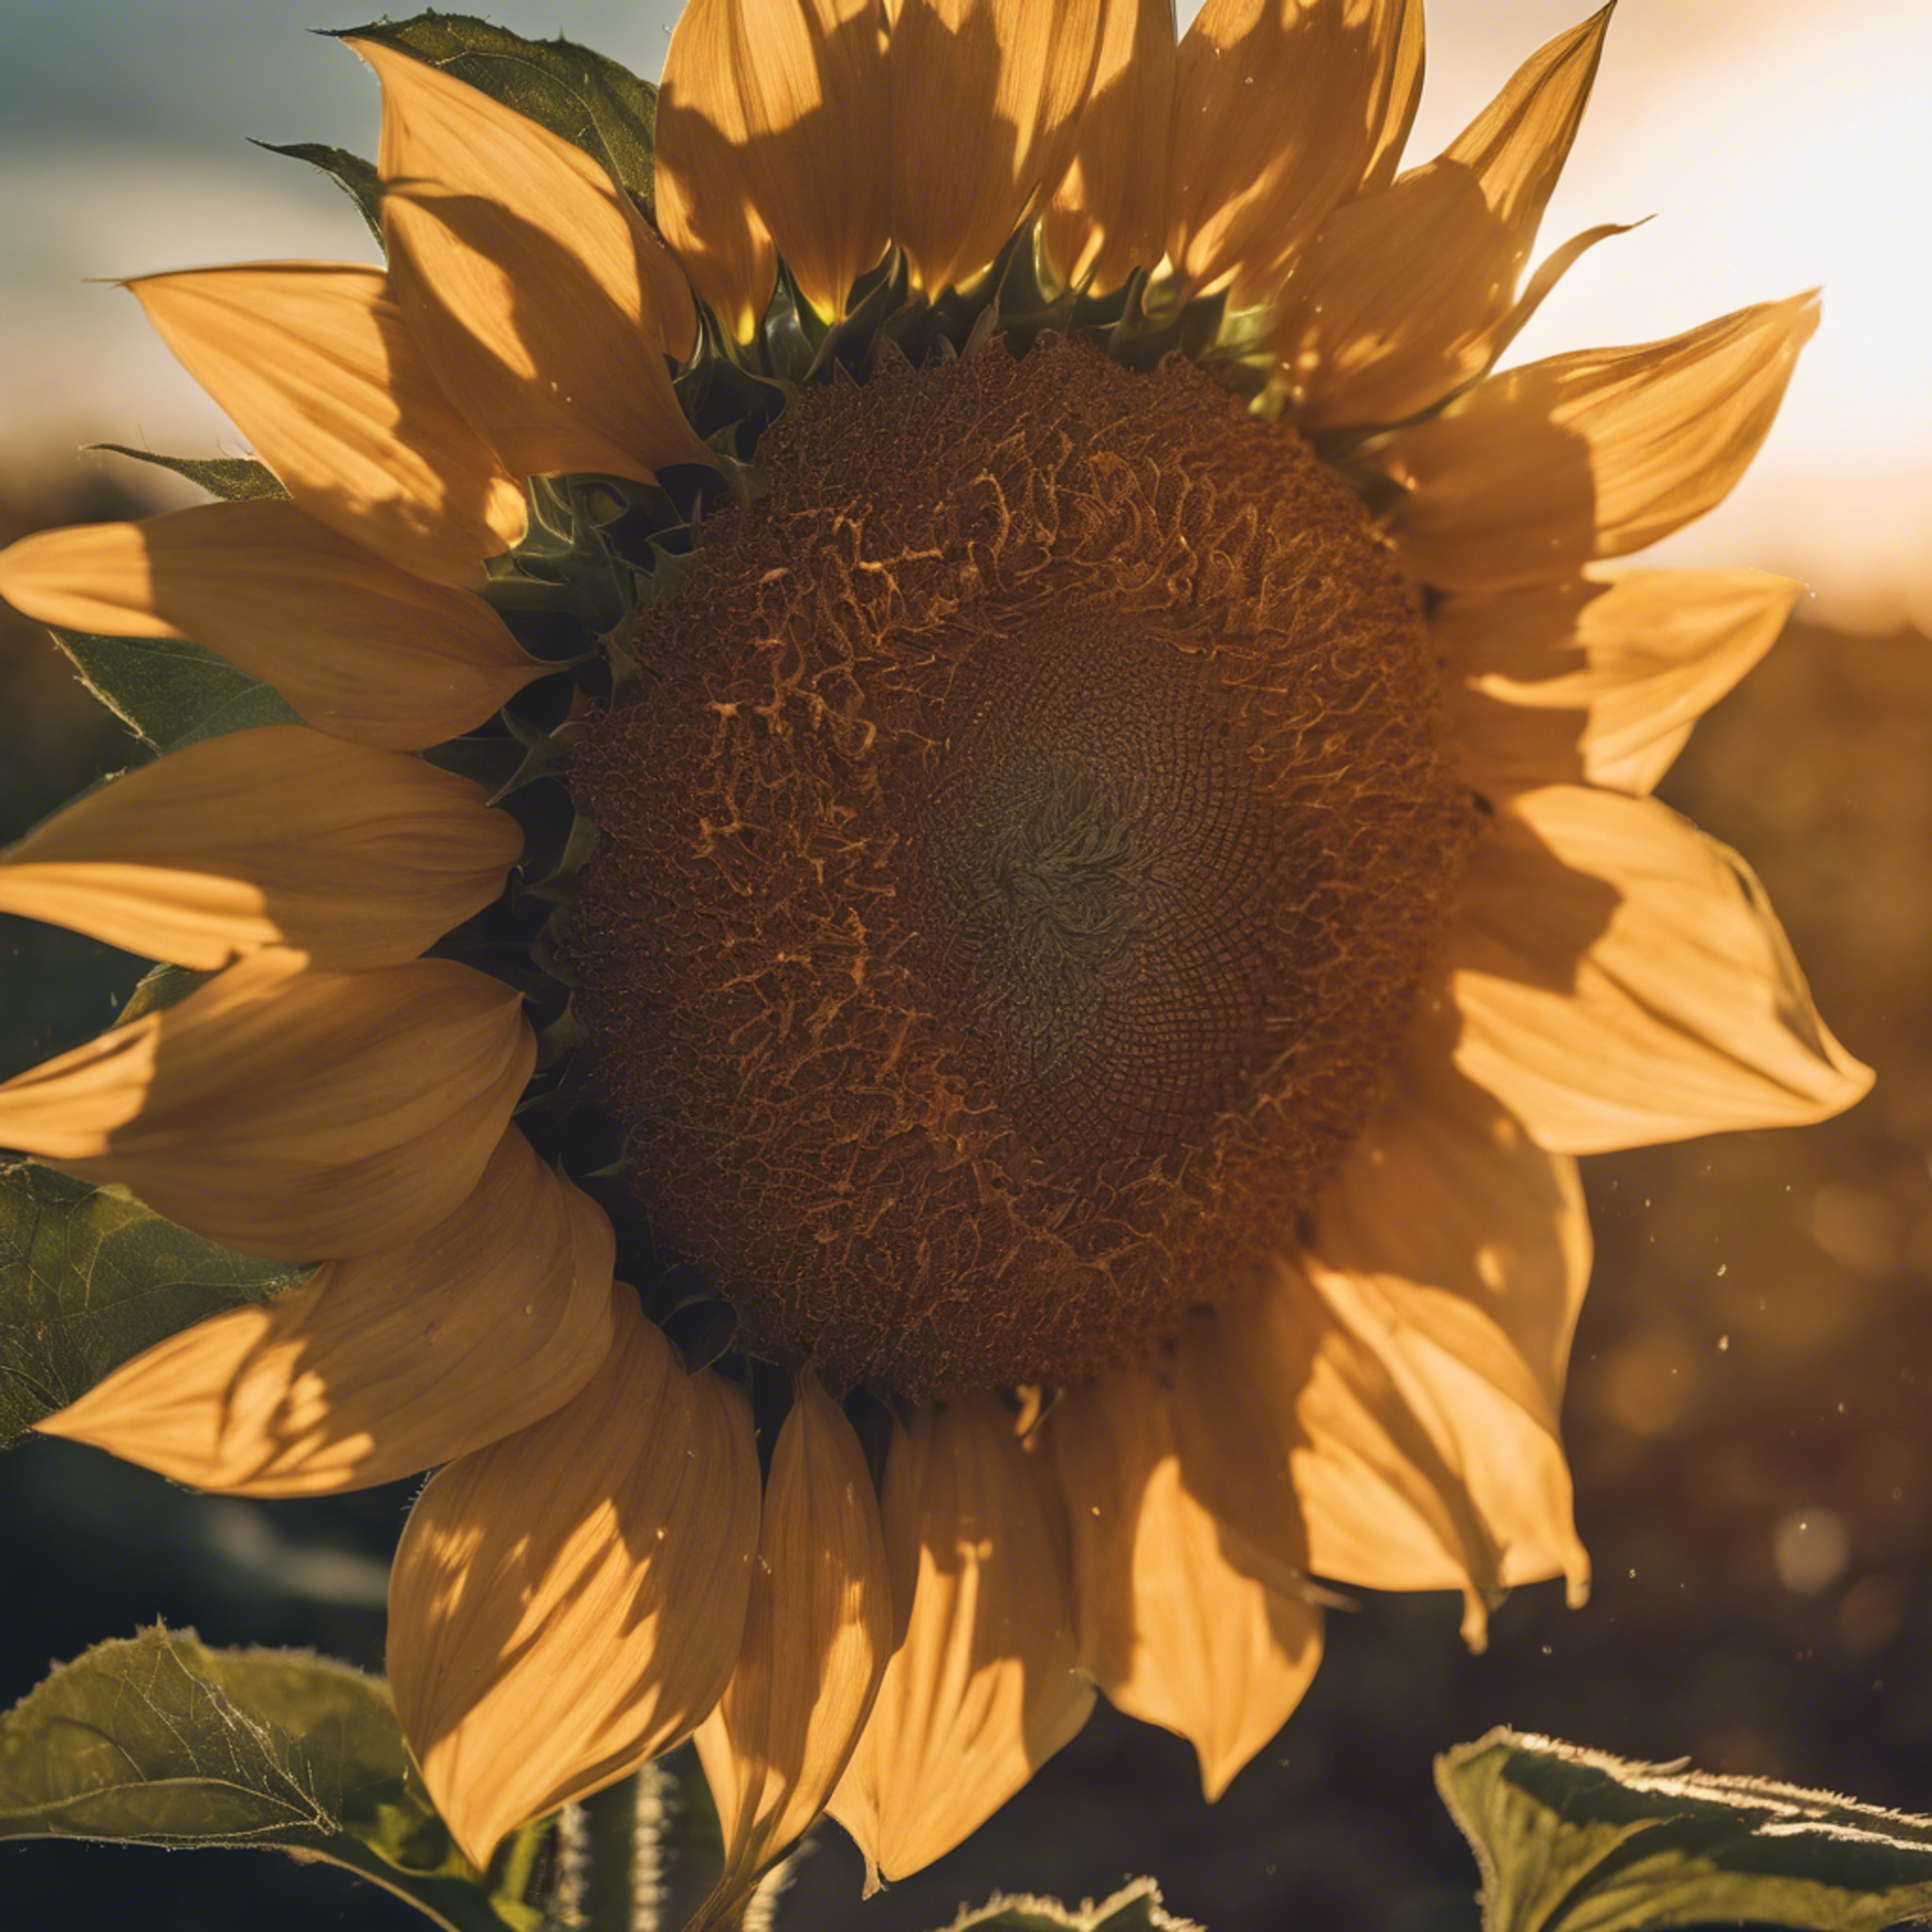 A sunflower facing the sun during a sunset.壁紙[9b42fe1f279f4e8bae2c]